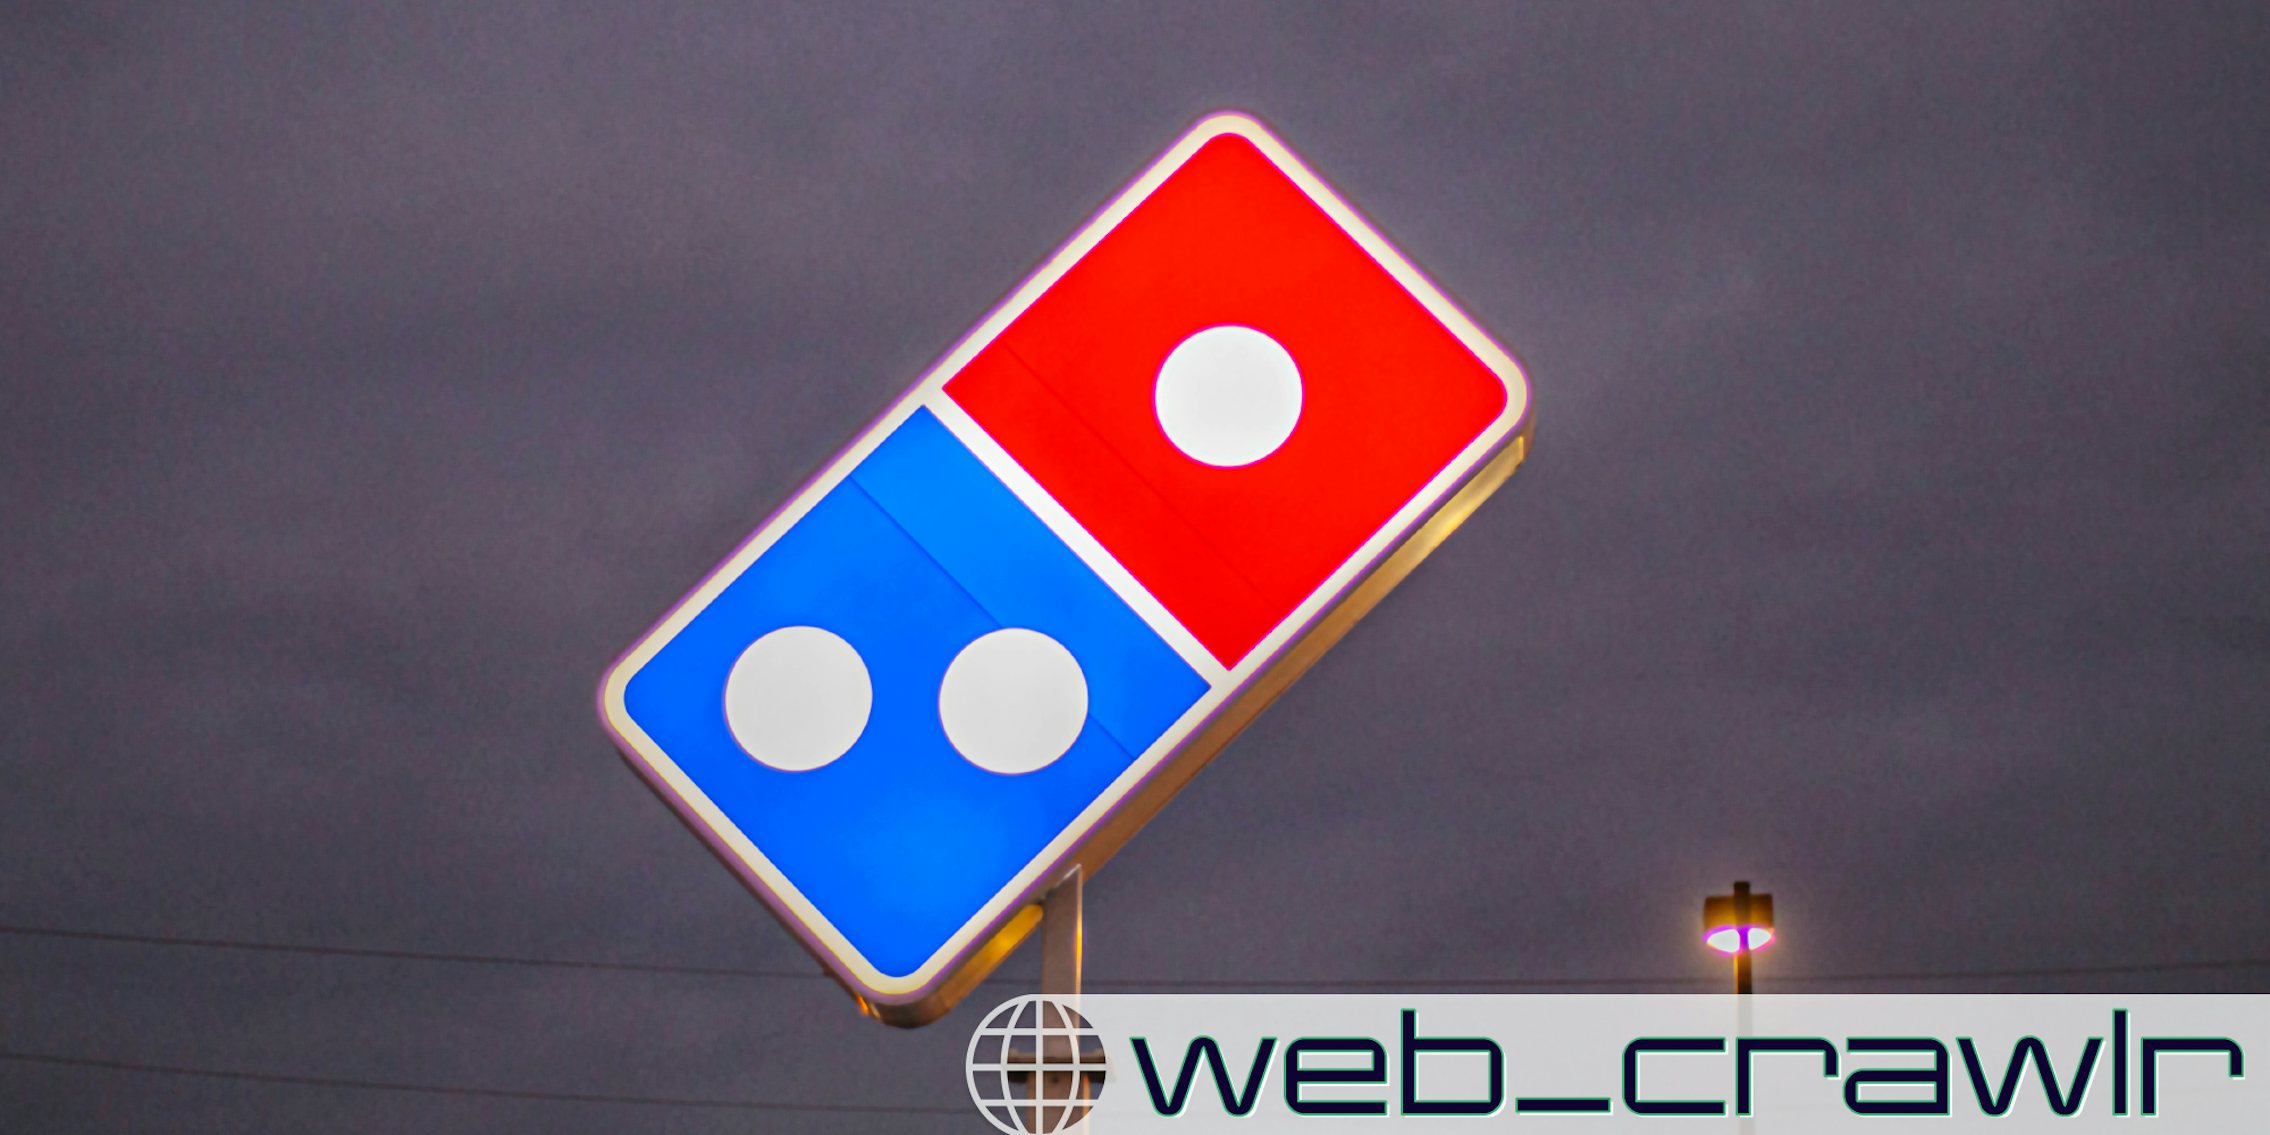 Newsletter: Customer shares pathetic Domino’s pizza fail